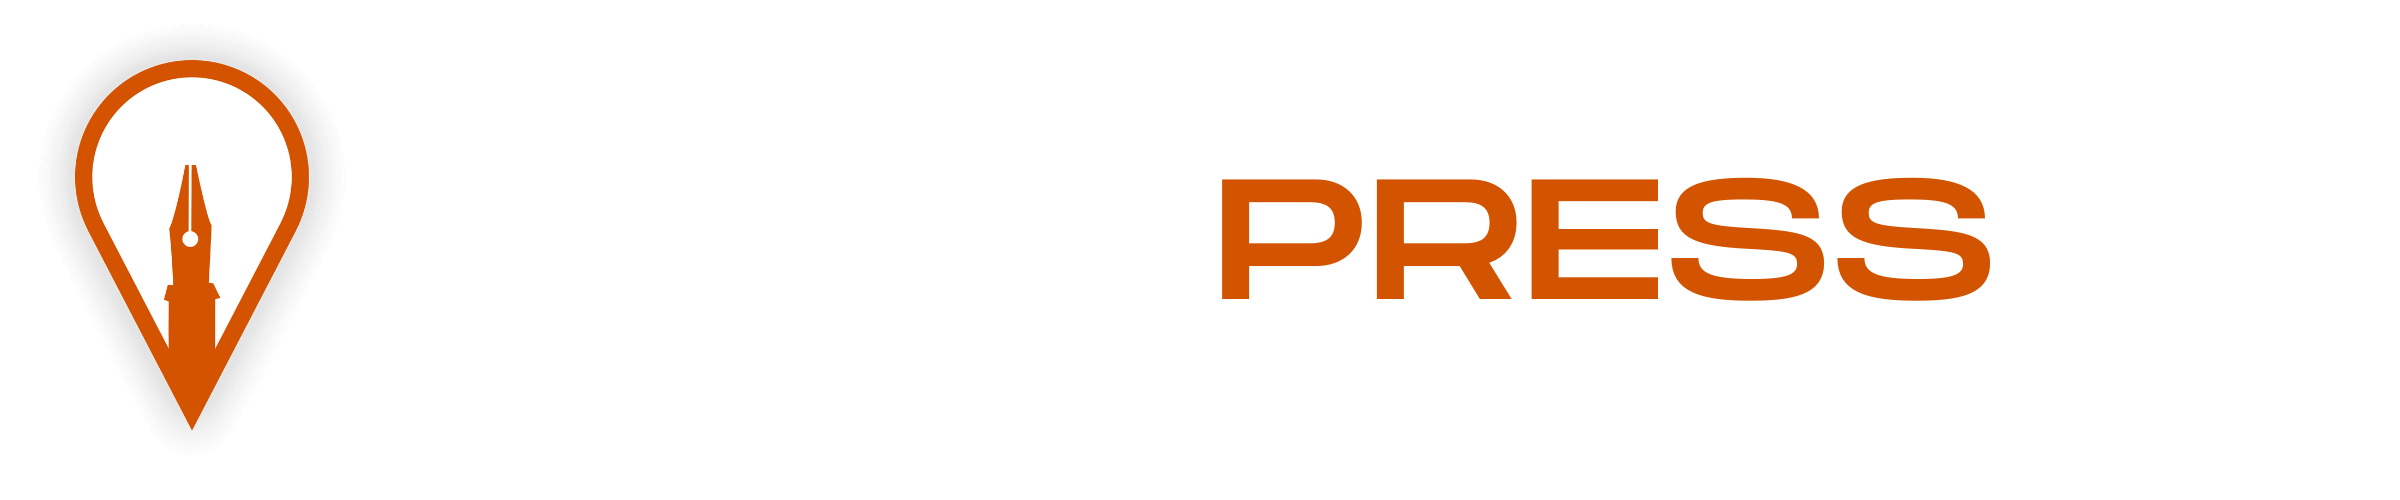 Local Press Co New Logo 1 White